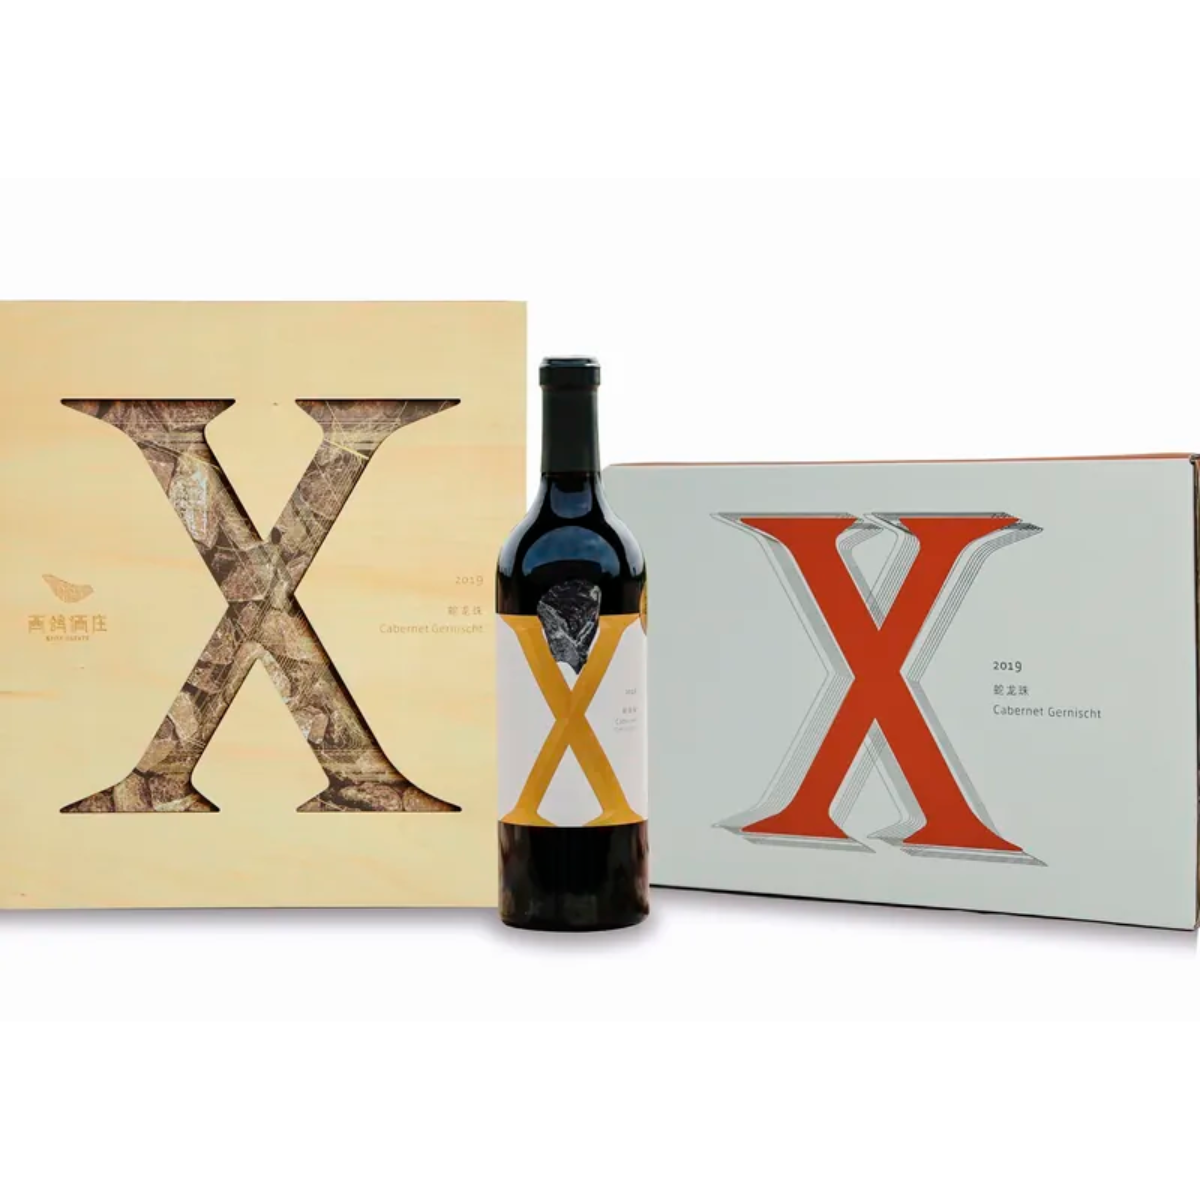 Xige “X” Cabernet Gernischt Cabernet Gernischt 2019 (with box) 西鴿“X”蛇龍珠乾紅葡萄酒2019 (連木盒)